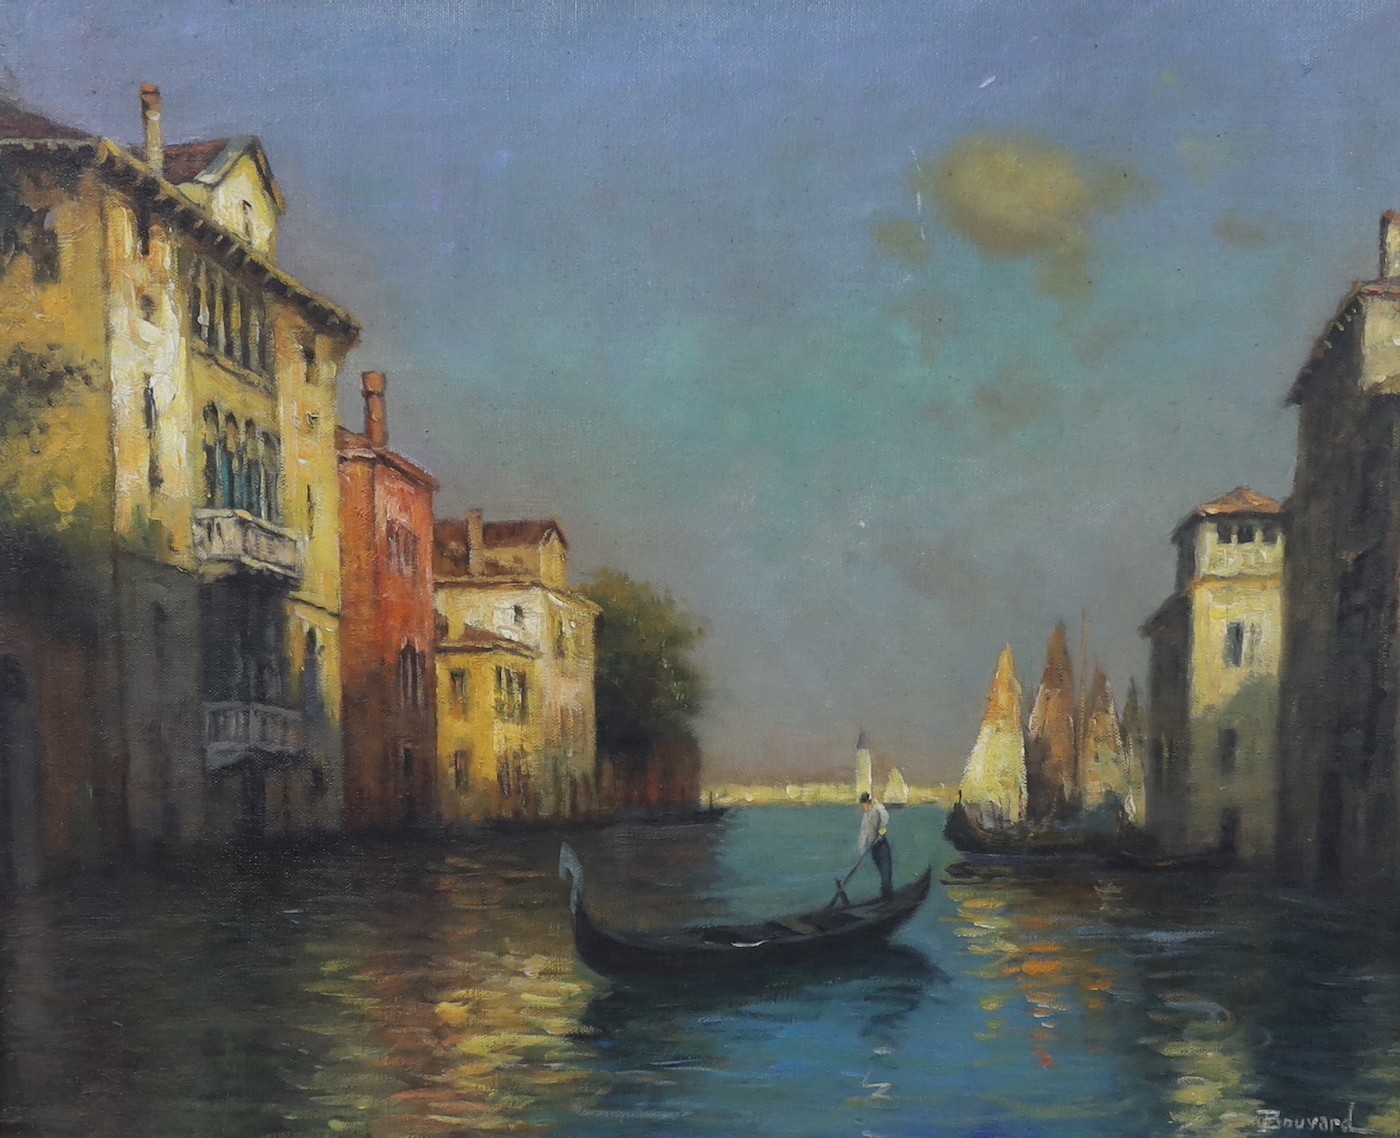 After Bouvard, oil on canvas board, Venetian canal scene, bears signature, 44 x 54cm